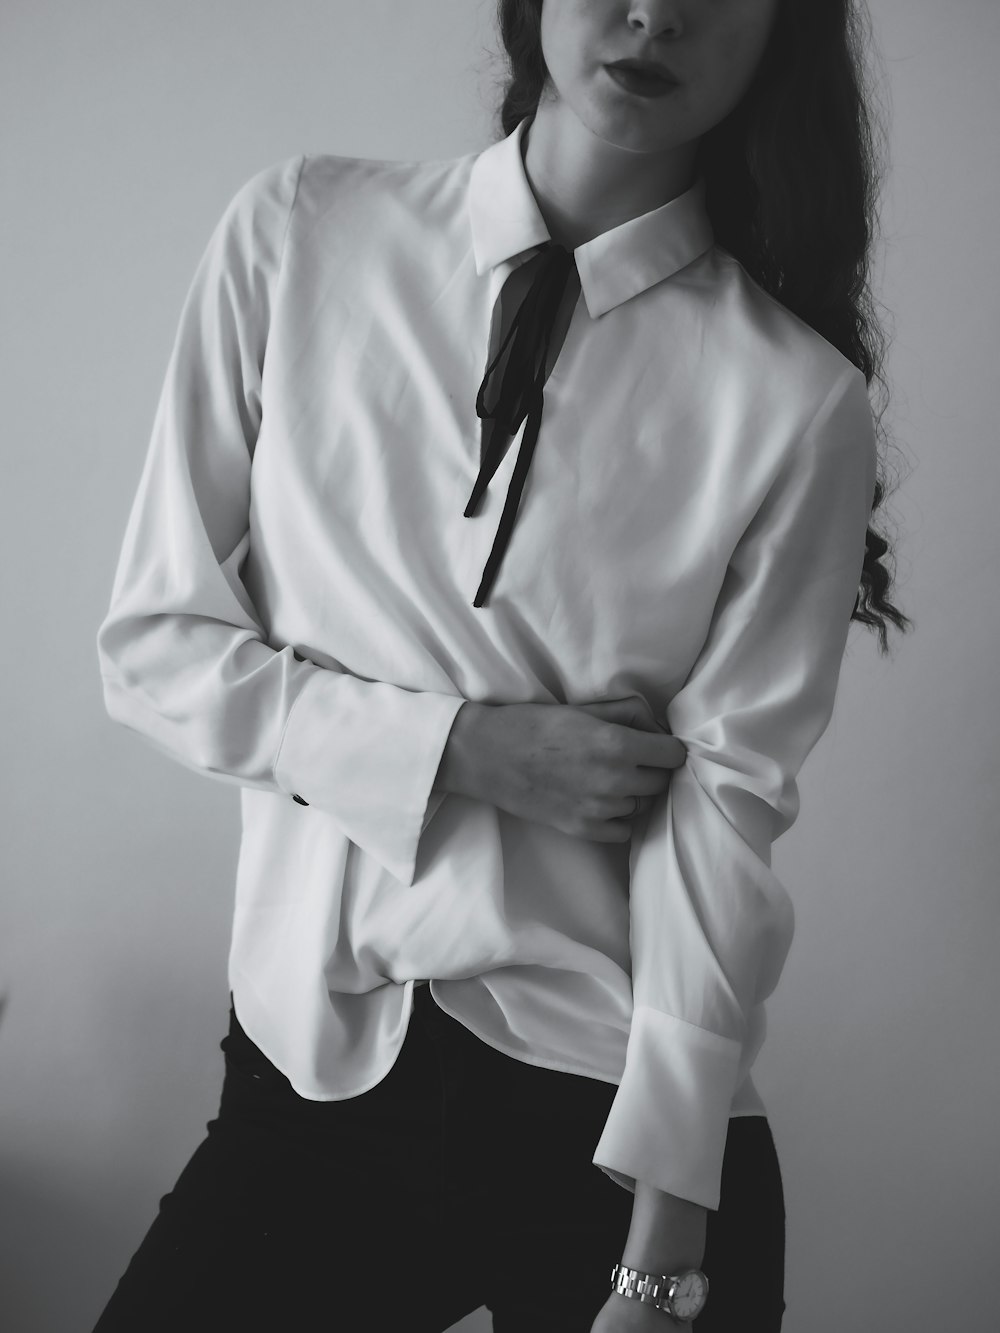 woman in white long sleeve shirt